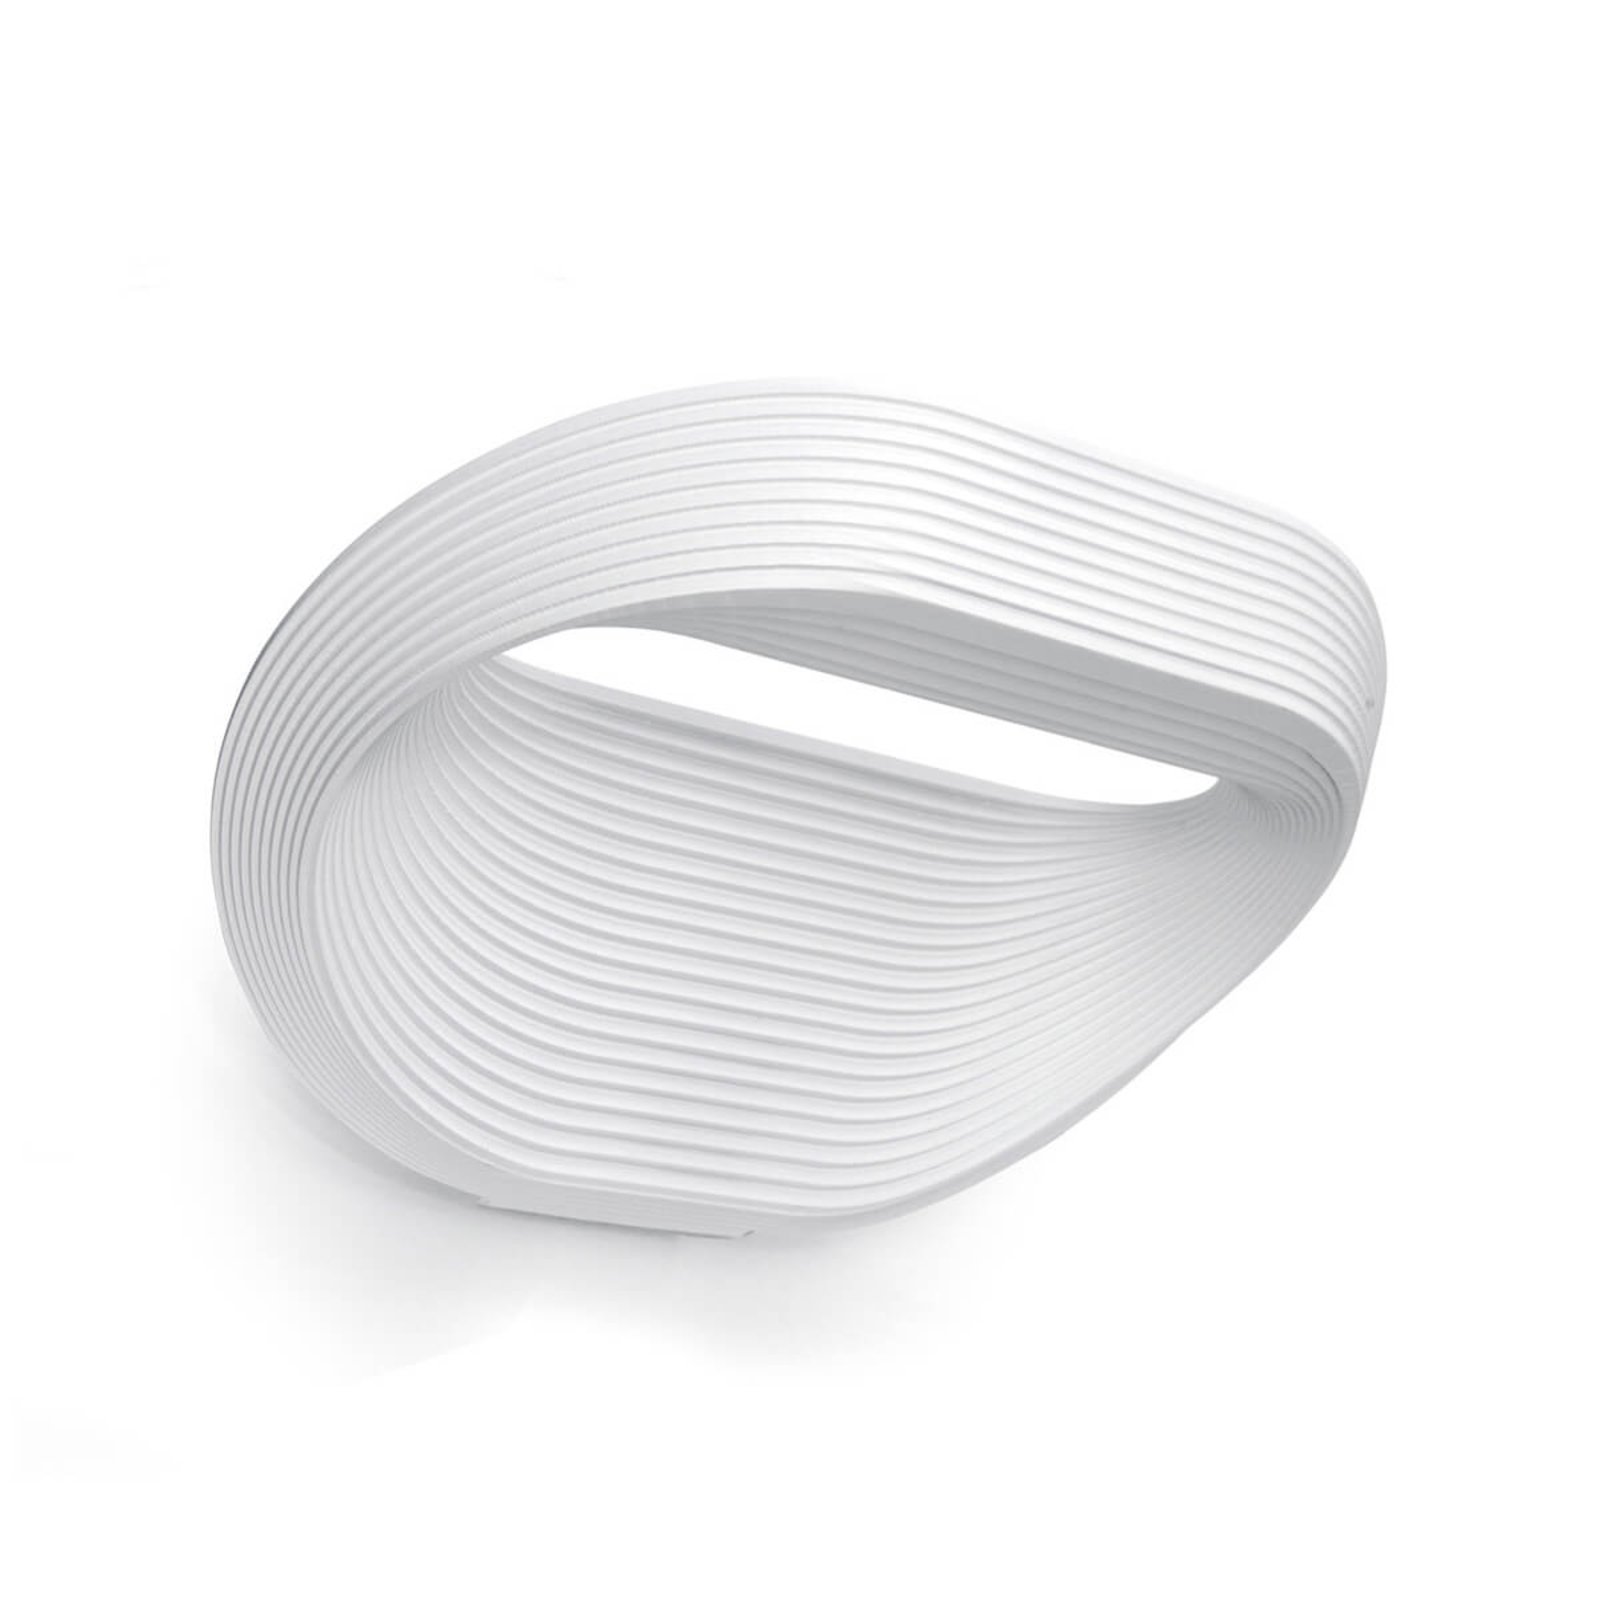 Cini&Nils Sestessa - bílé nástěnné svítidlo LED, 24 cm